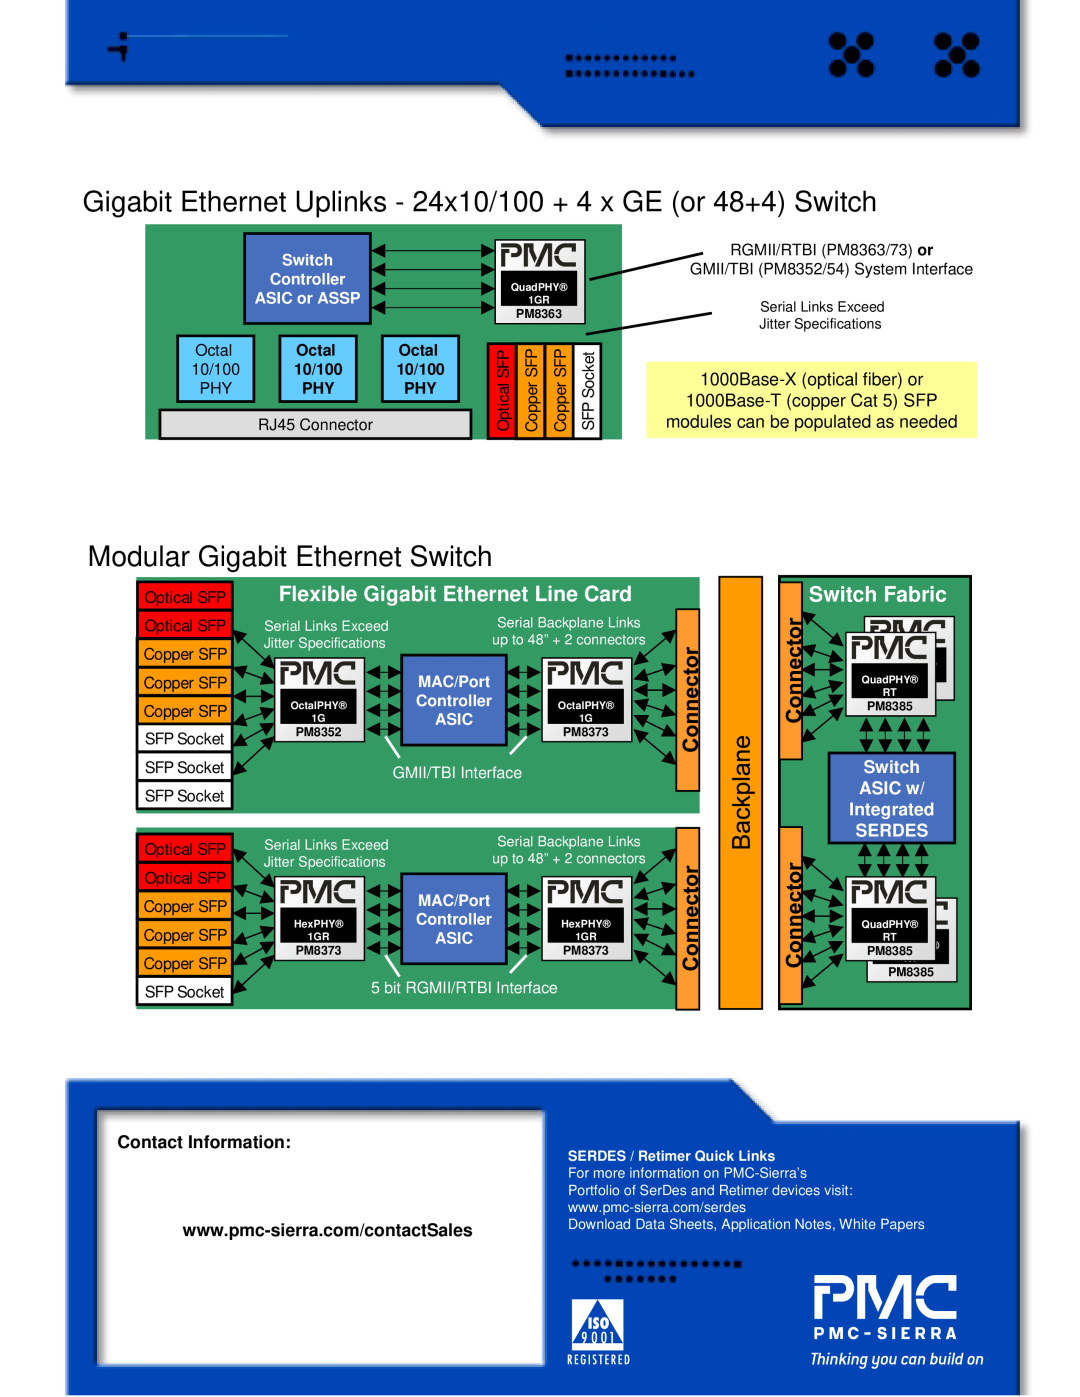 PMC-Sierra Gigabit Ethernet Switch Gigabit Ethernet Uplinks - 24x10/100 + 4 x GE or 48+4 Switch, Switch Fabric, SFP Socket 